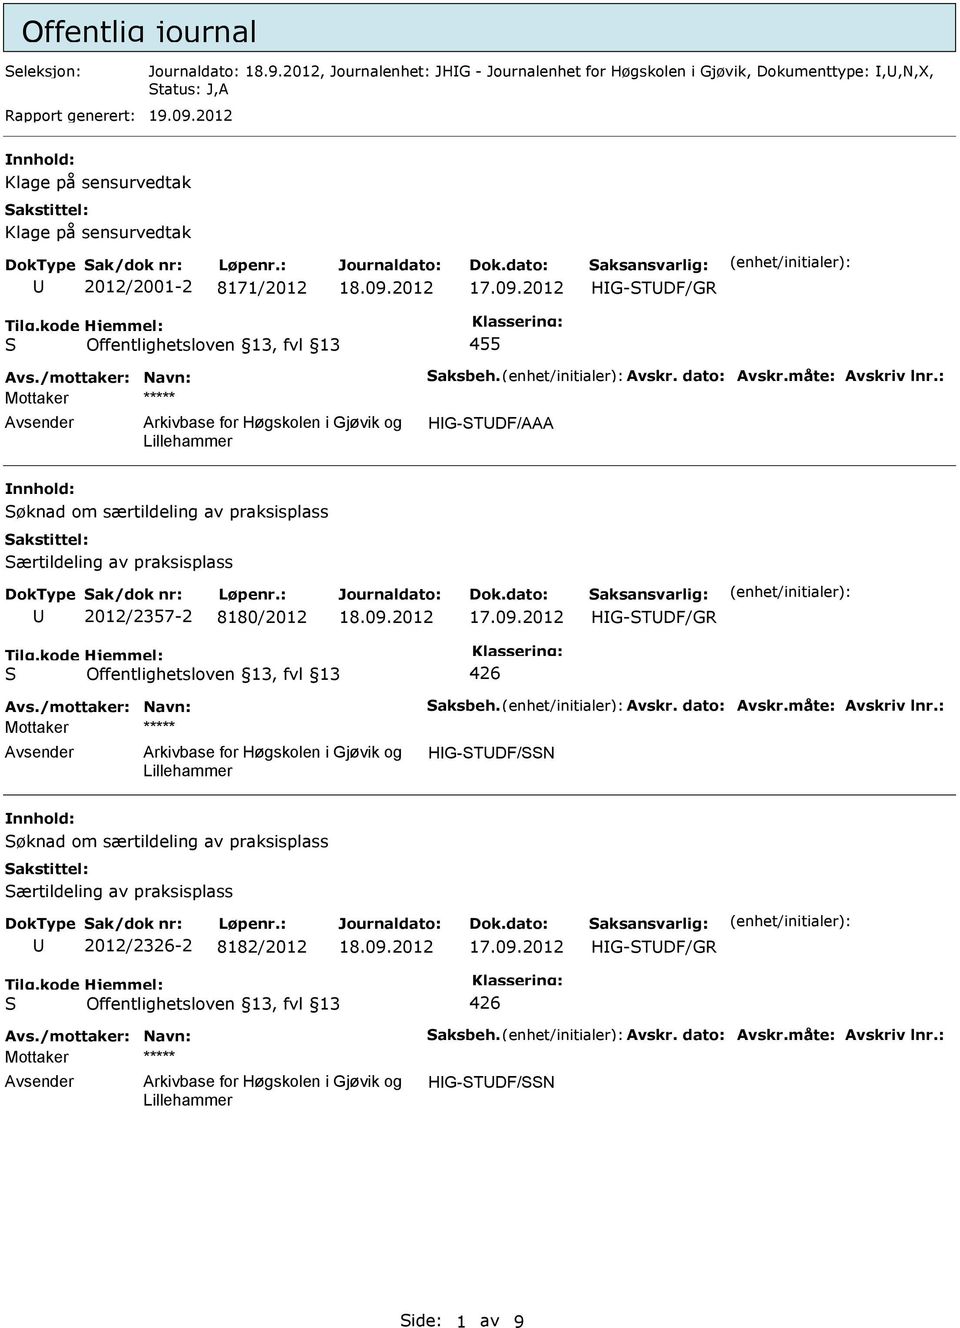 2012 Klage på sensurvedtak Klage på sensurvedtak 2012/2001-2 8171/2012 455 HG-TDF/AAA øknad om særtildeling